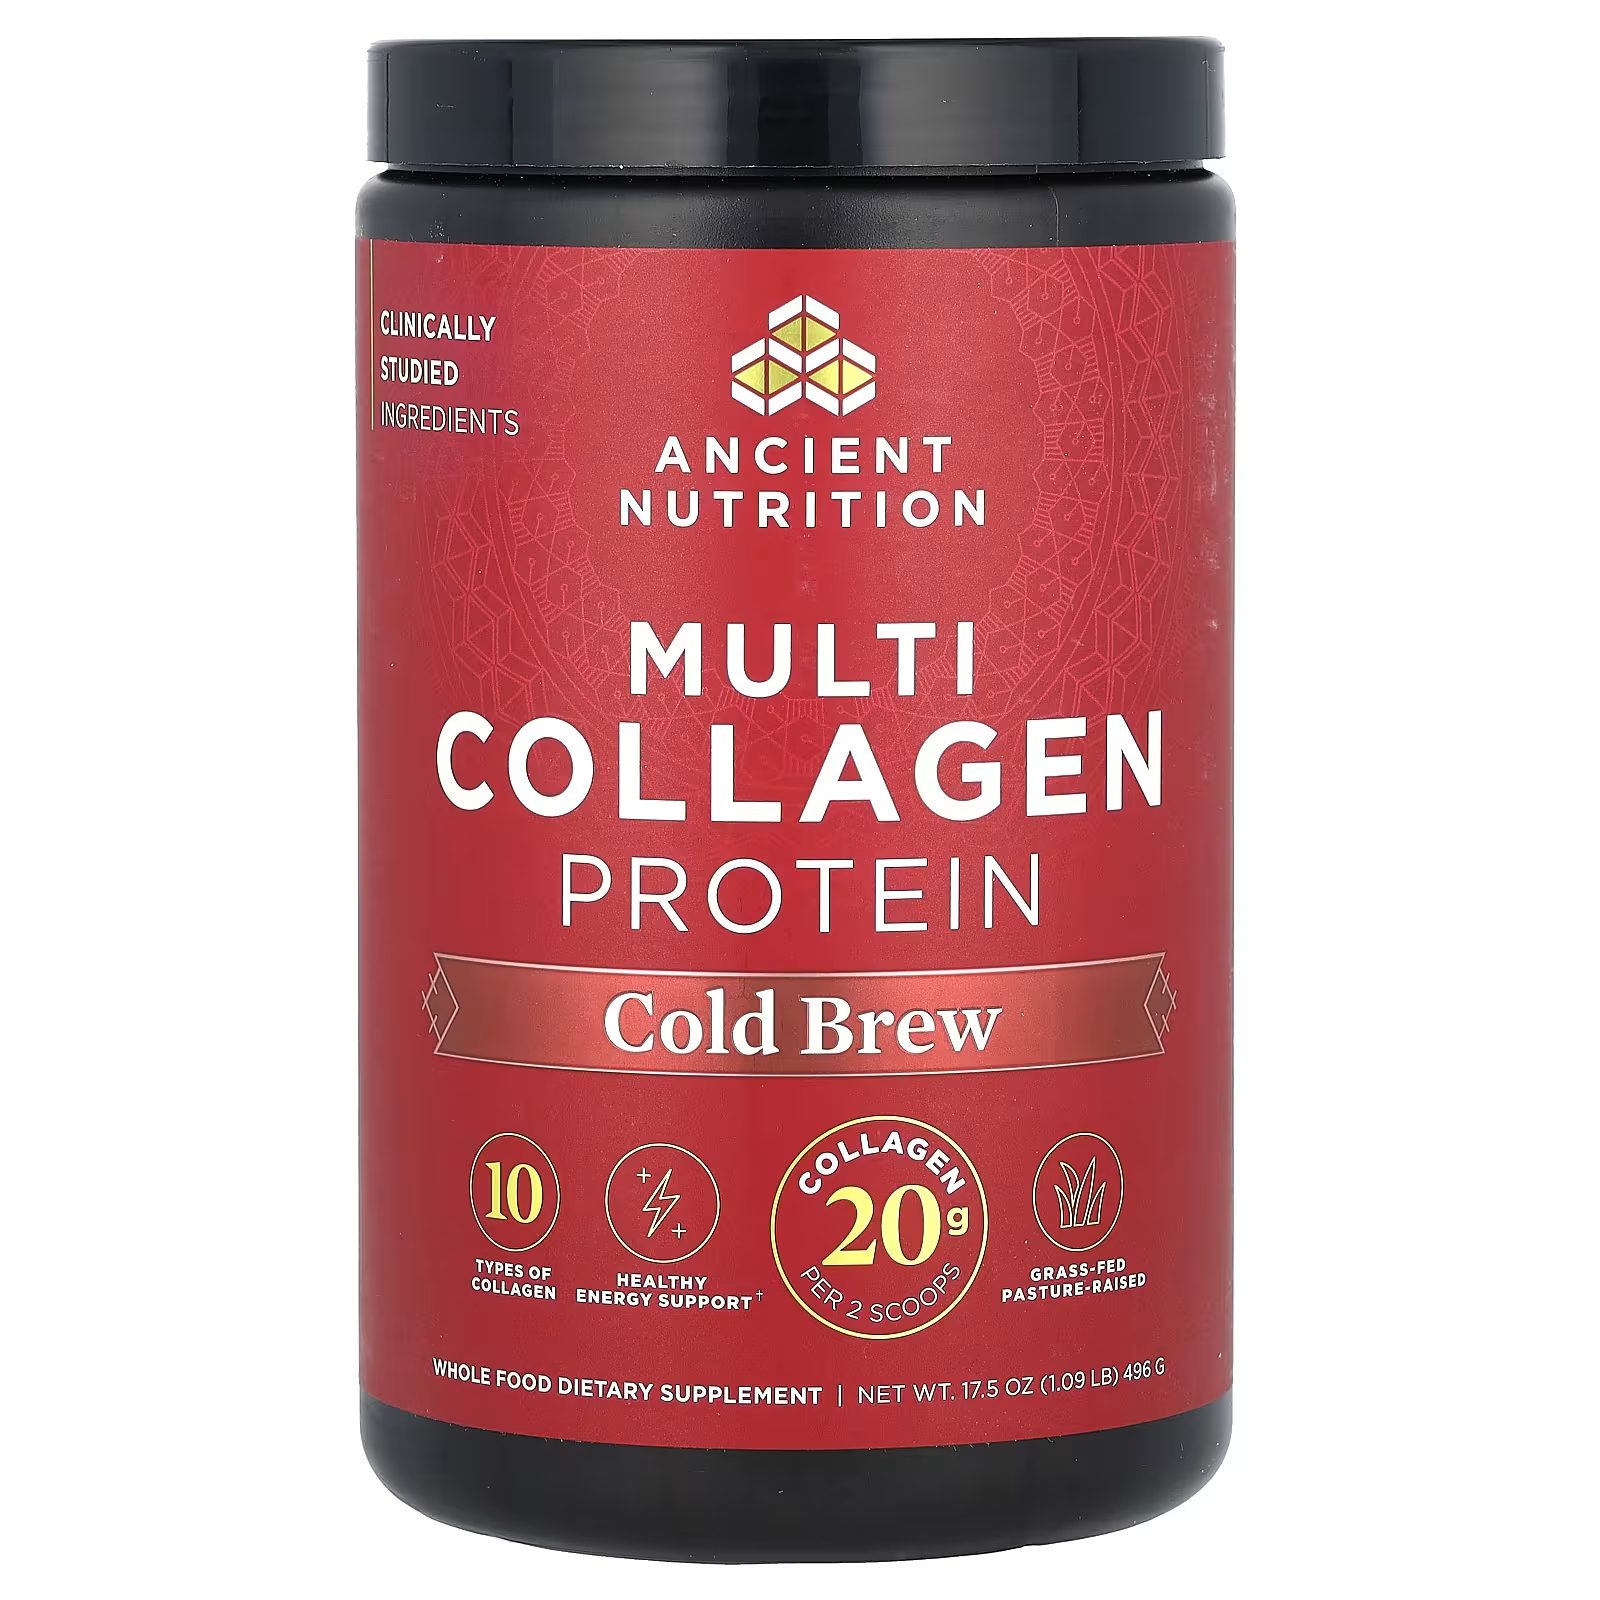 Пищевая добавка Ancient Nutrition Multi Collagen Protein Cold Brew, 496 г пищевая добавка ancient nutrition multi collagen protein brain boost ванильный 454 5 г